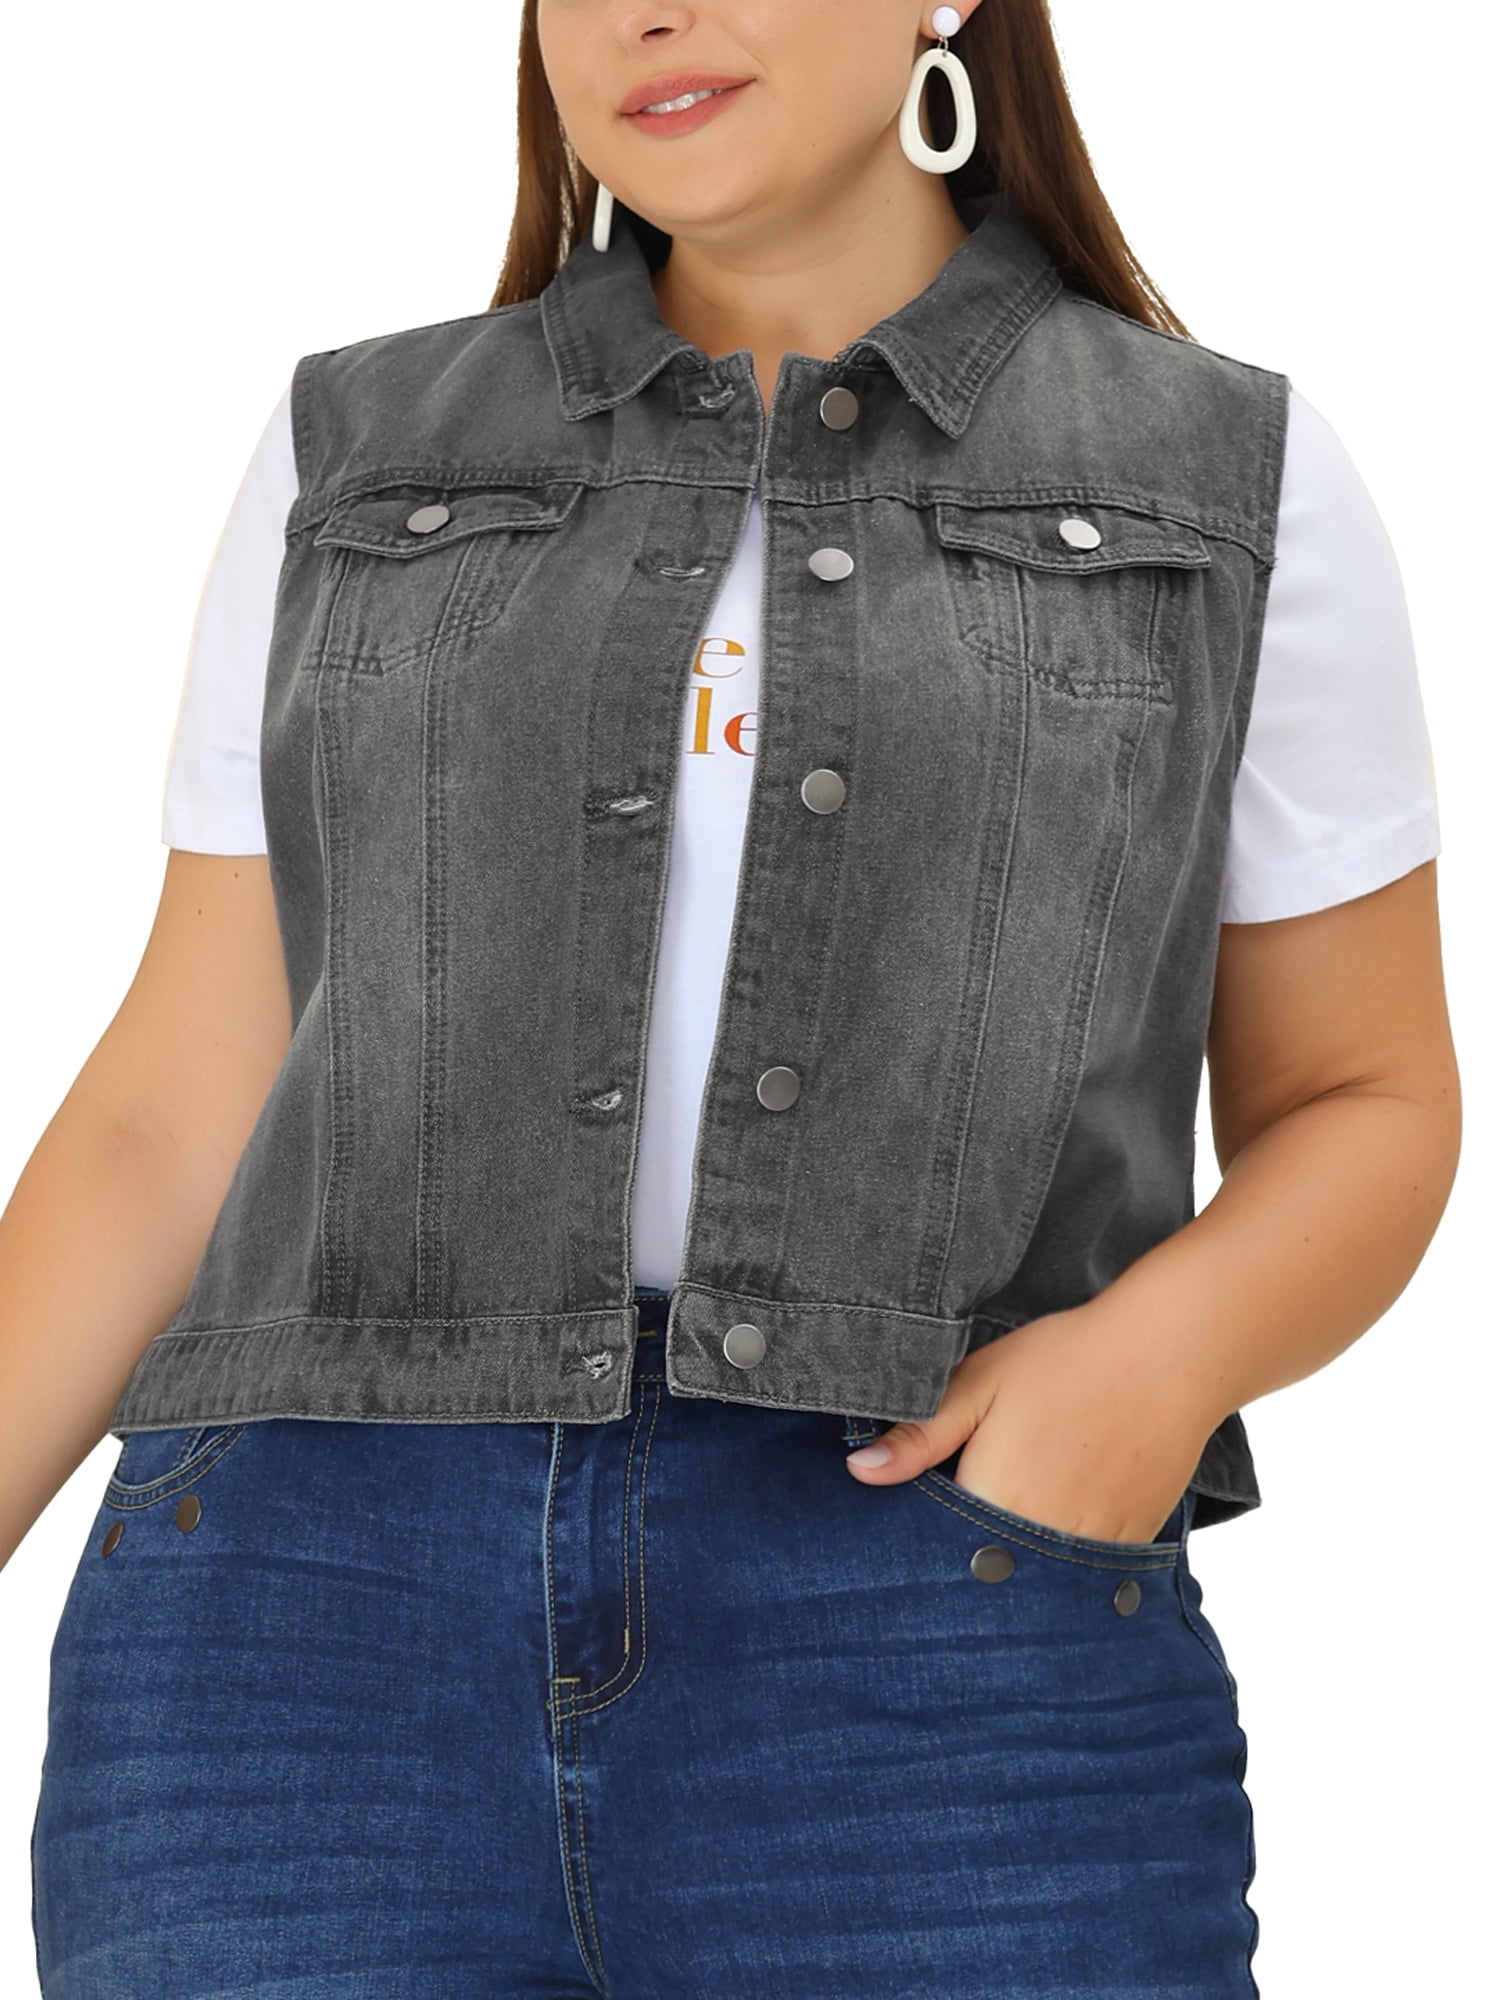 Twcx Womens Wash Sleeveless Ripped Plus Size Pockets Demin Jean Jackets Vest 